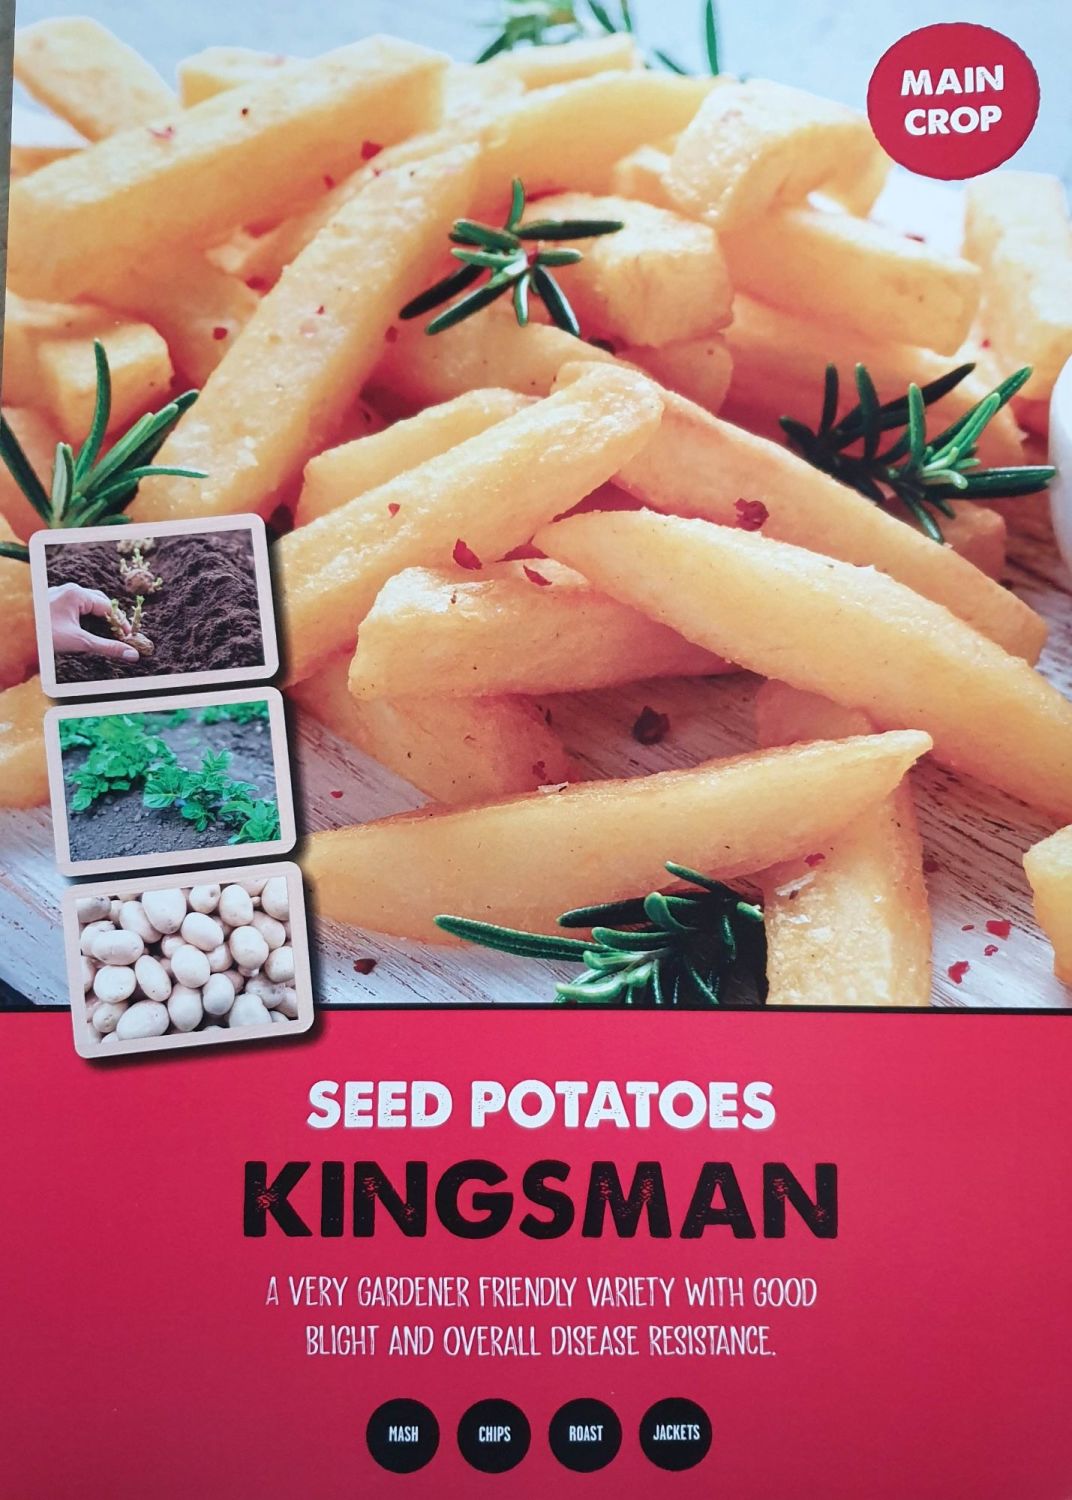 KINGSMAN seed potato main crop